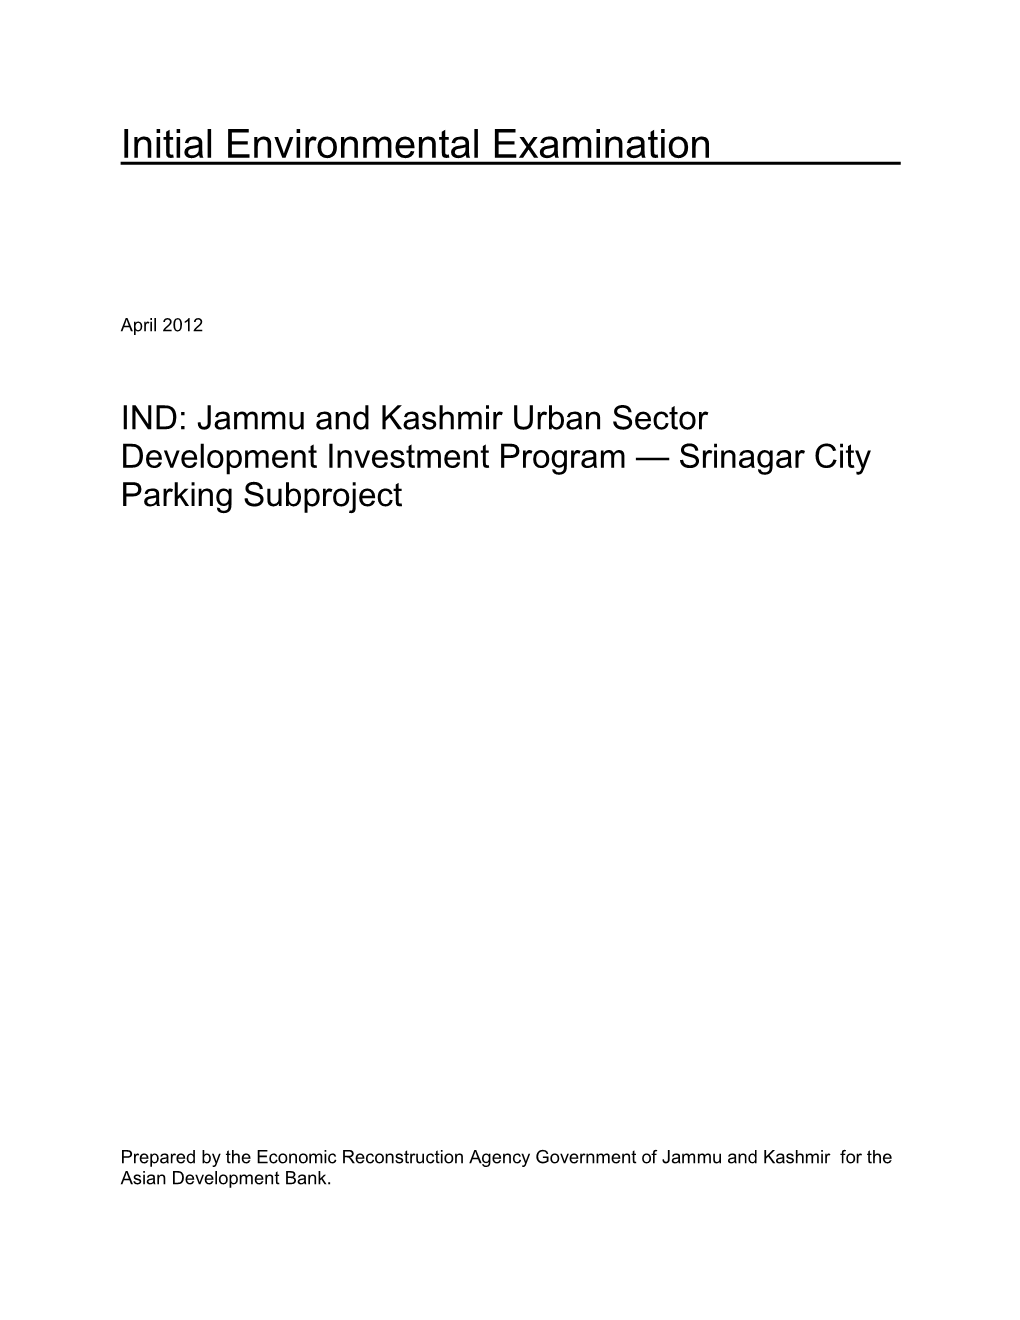 IEE: India: Srinagar City Parking Subproject, Jammu and Kashmir Urban Sector Development Investment Program